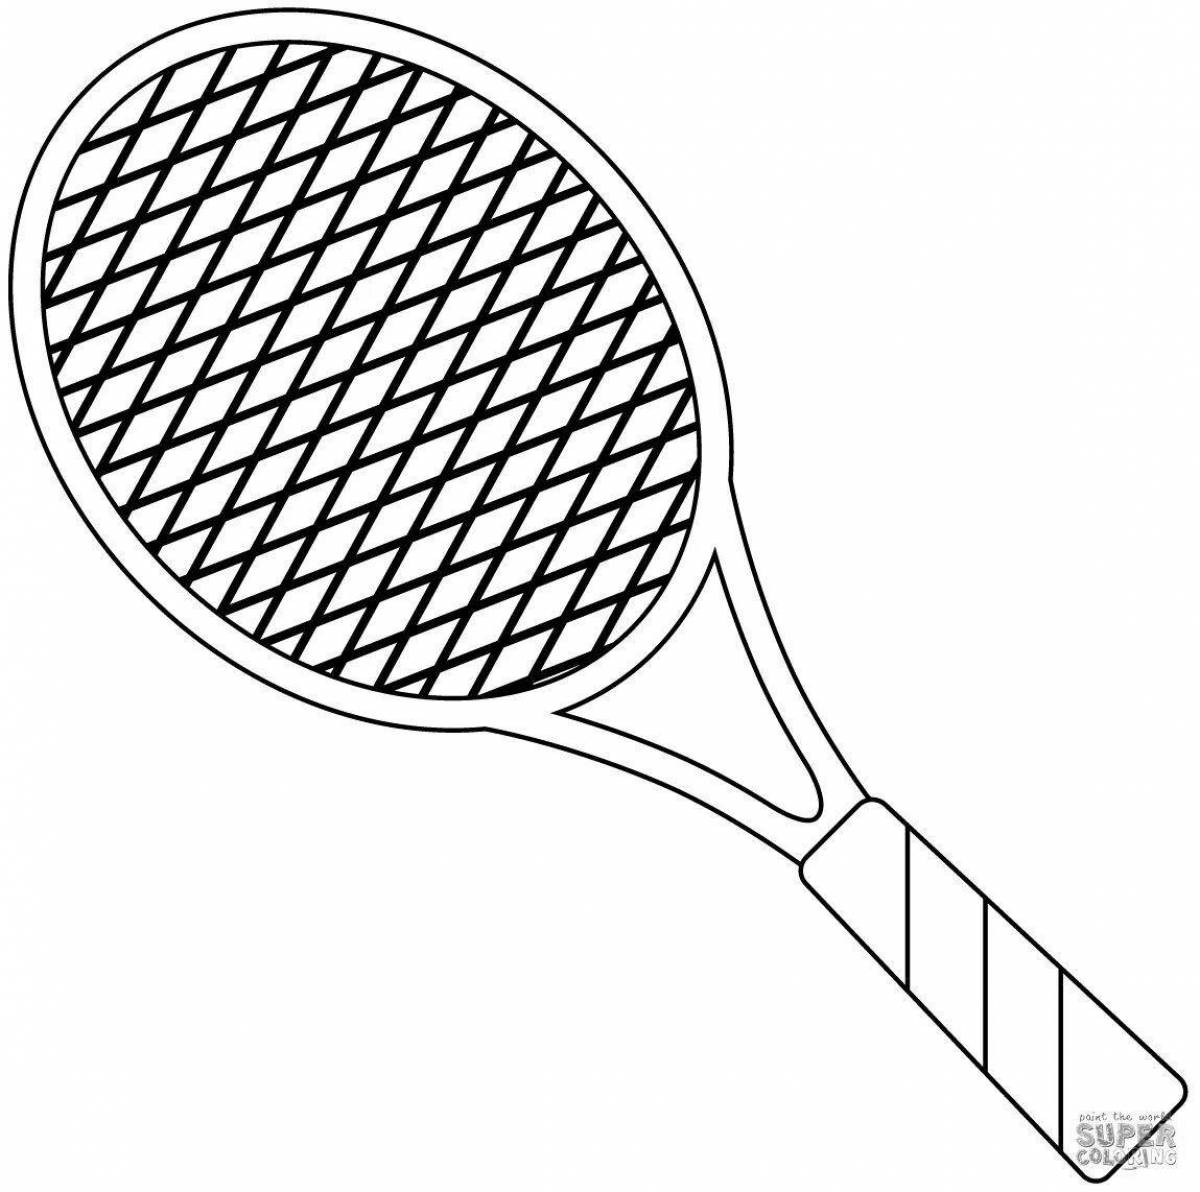 Intriguing tennis racket coloring